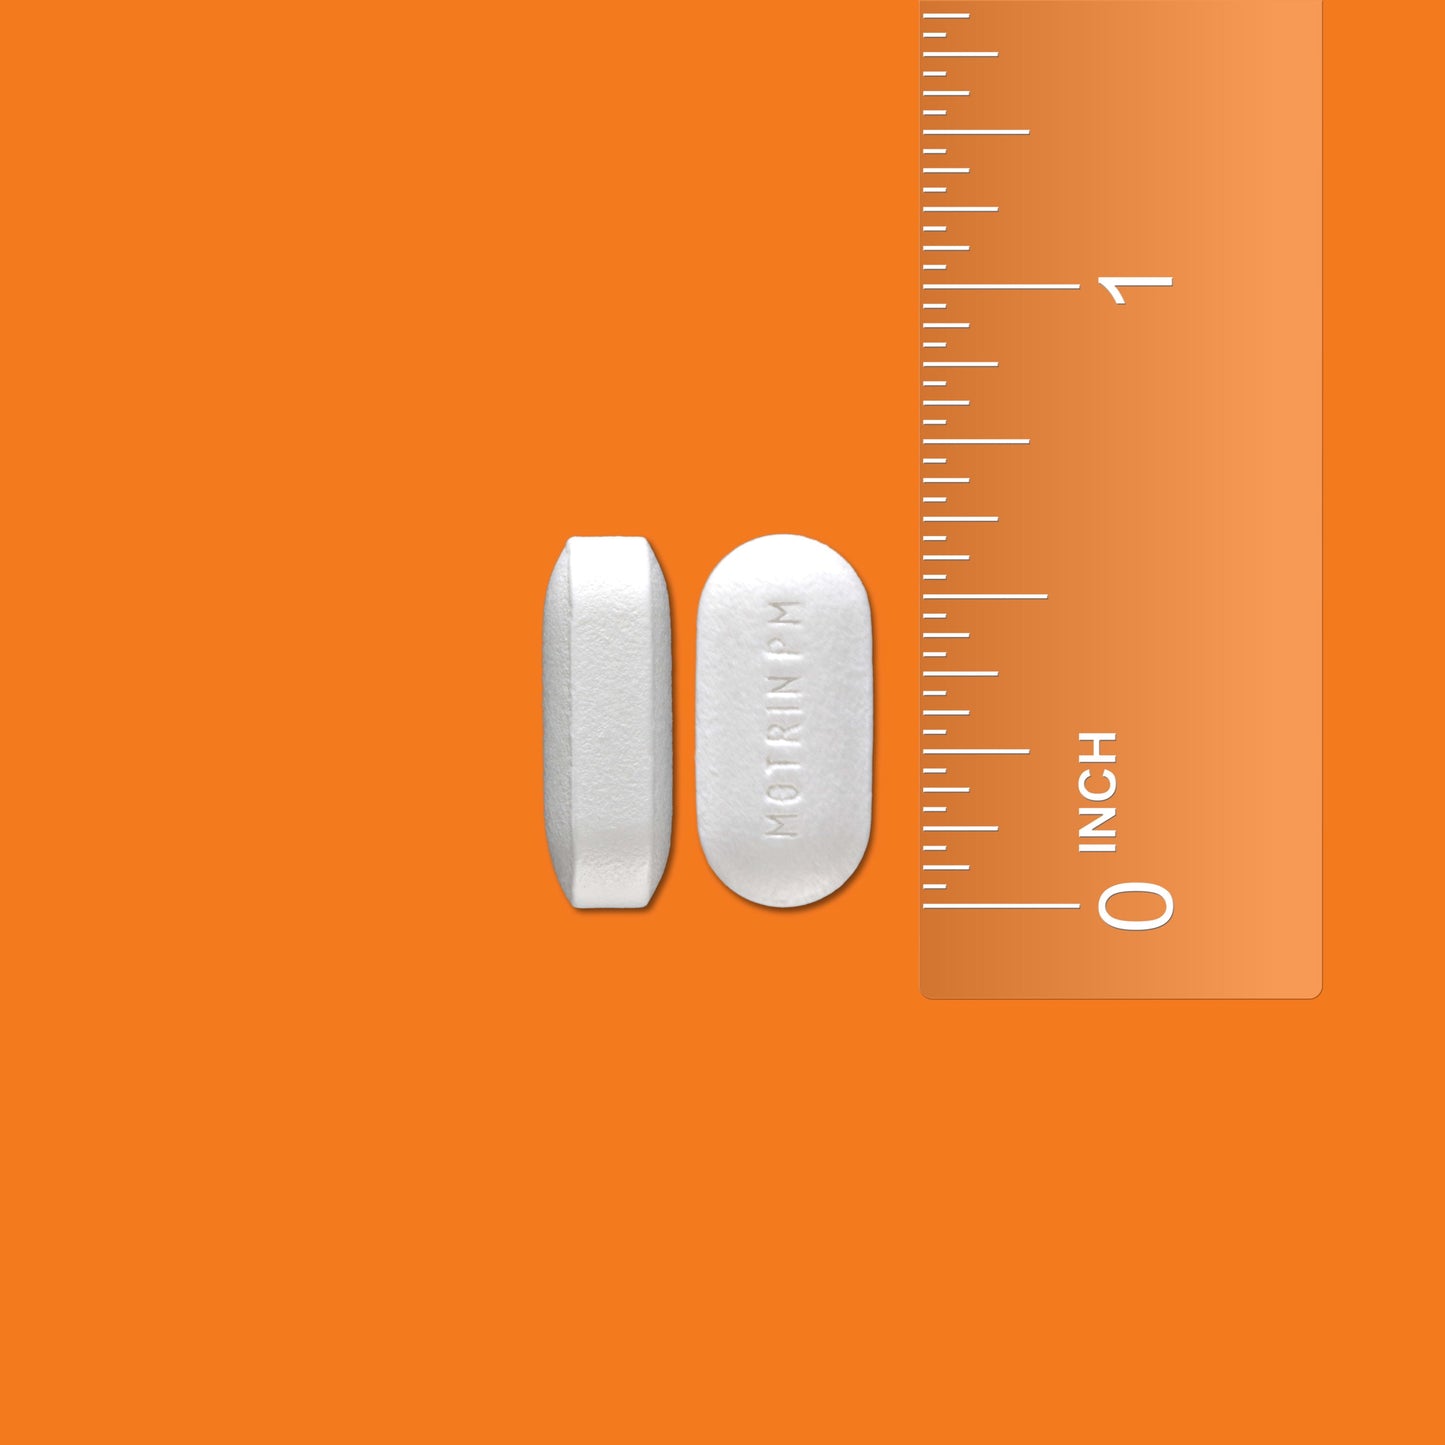 Motrin PM Caplets, 200 mg Ibuprofen & 38 mg Sleep Aid, 80 ct